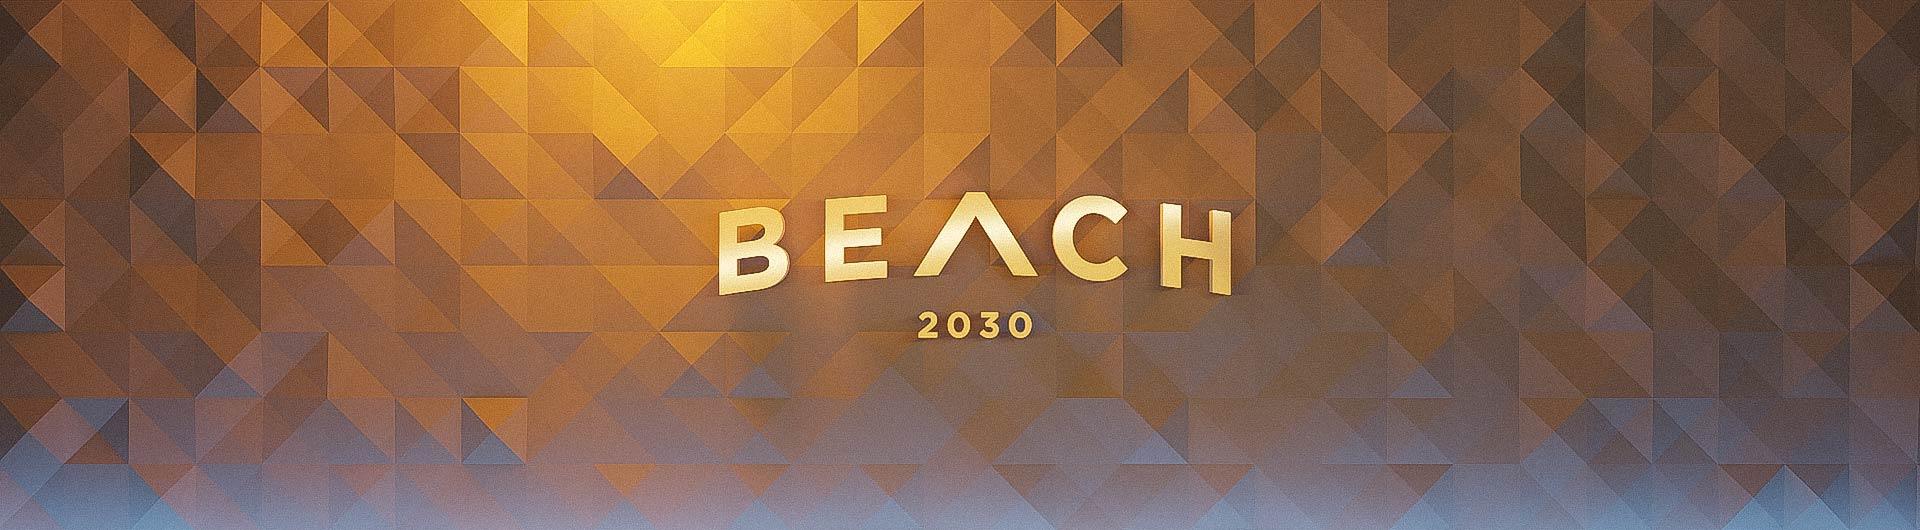 Beach 2030 Banner.